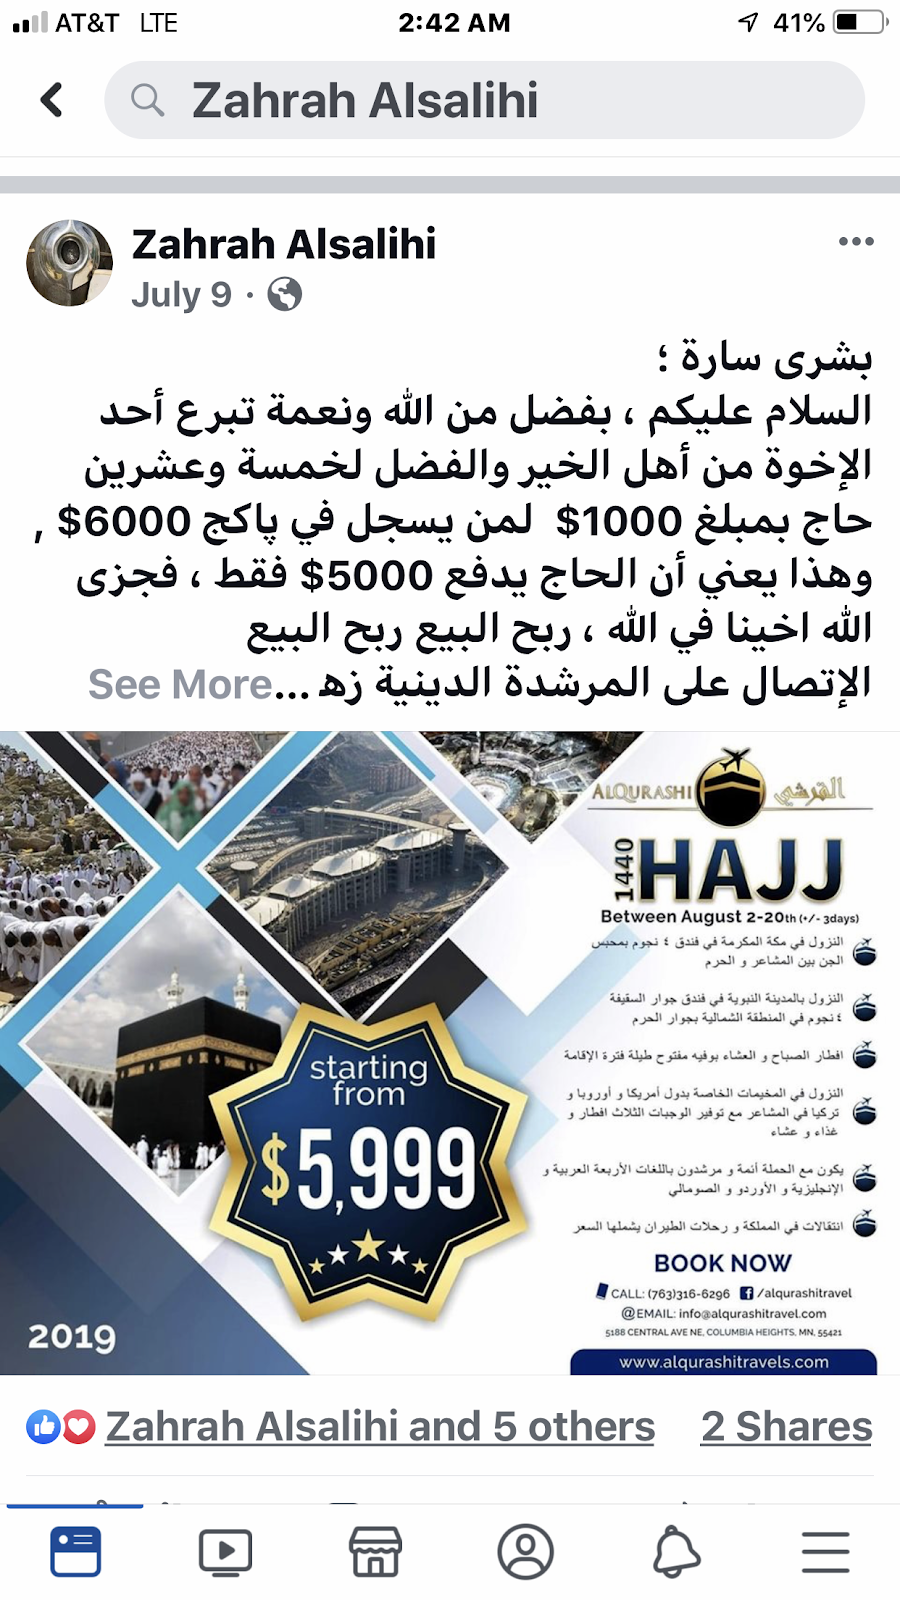 Al Qurashi Travel Agency | 5188 NE Central Ave, Columbia Heights, MN 55421 | Phone: (763) 200-1518